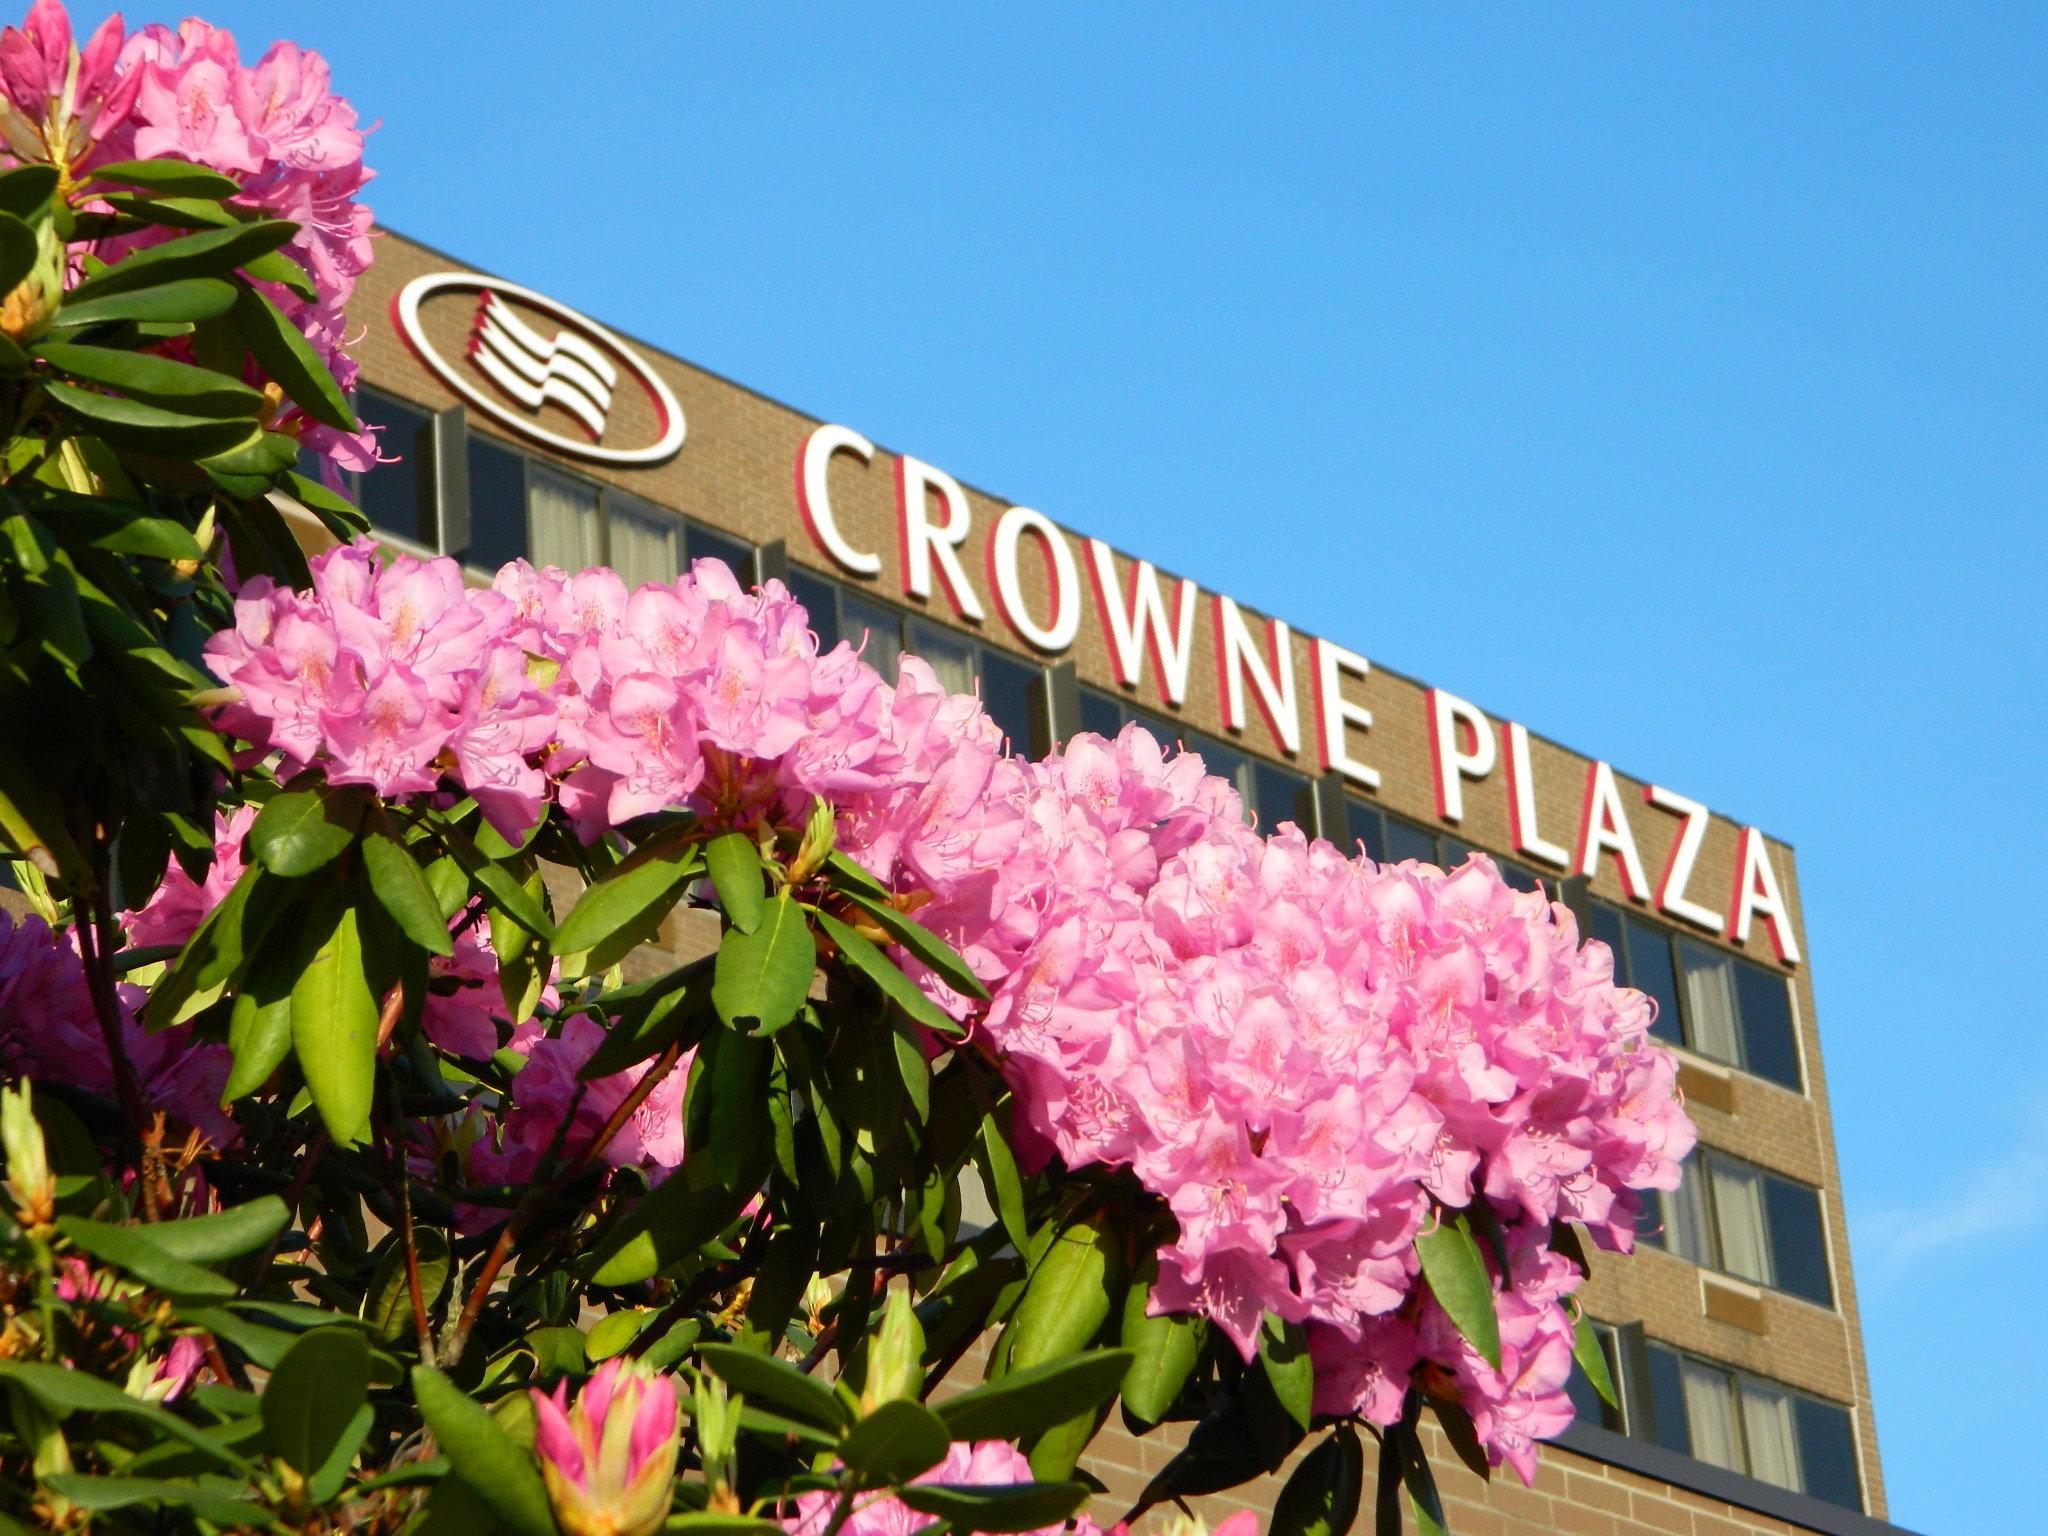 Crown Plaza Hotel, Danbury CT